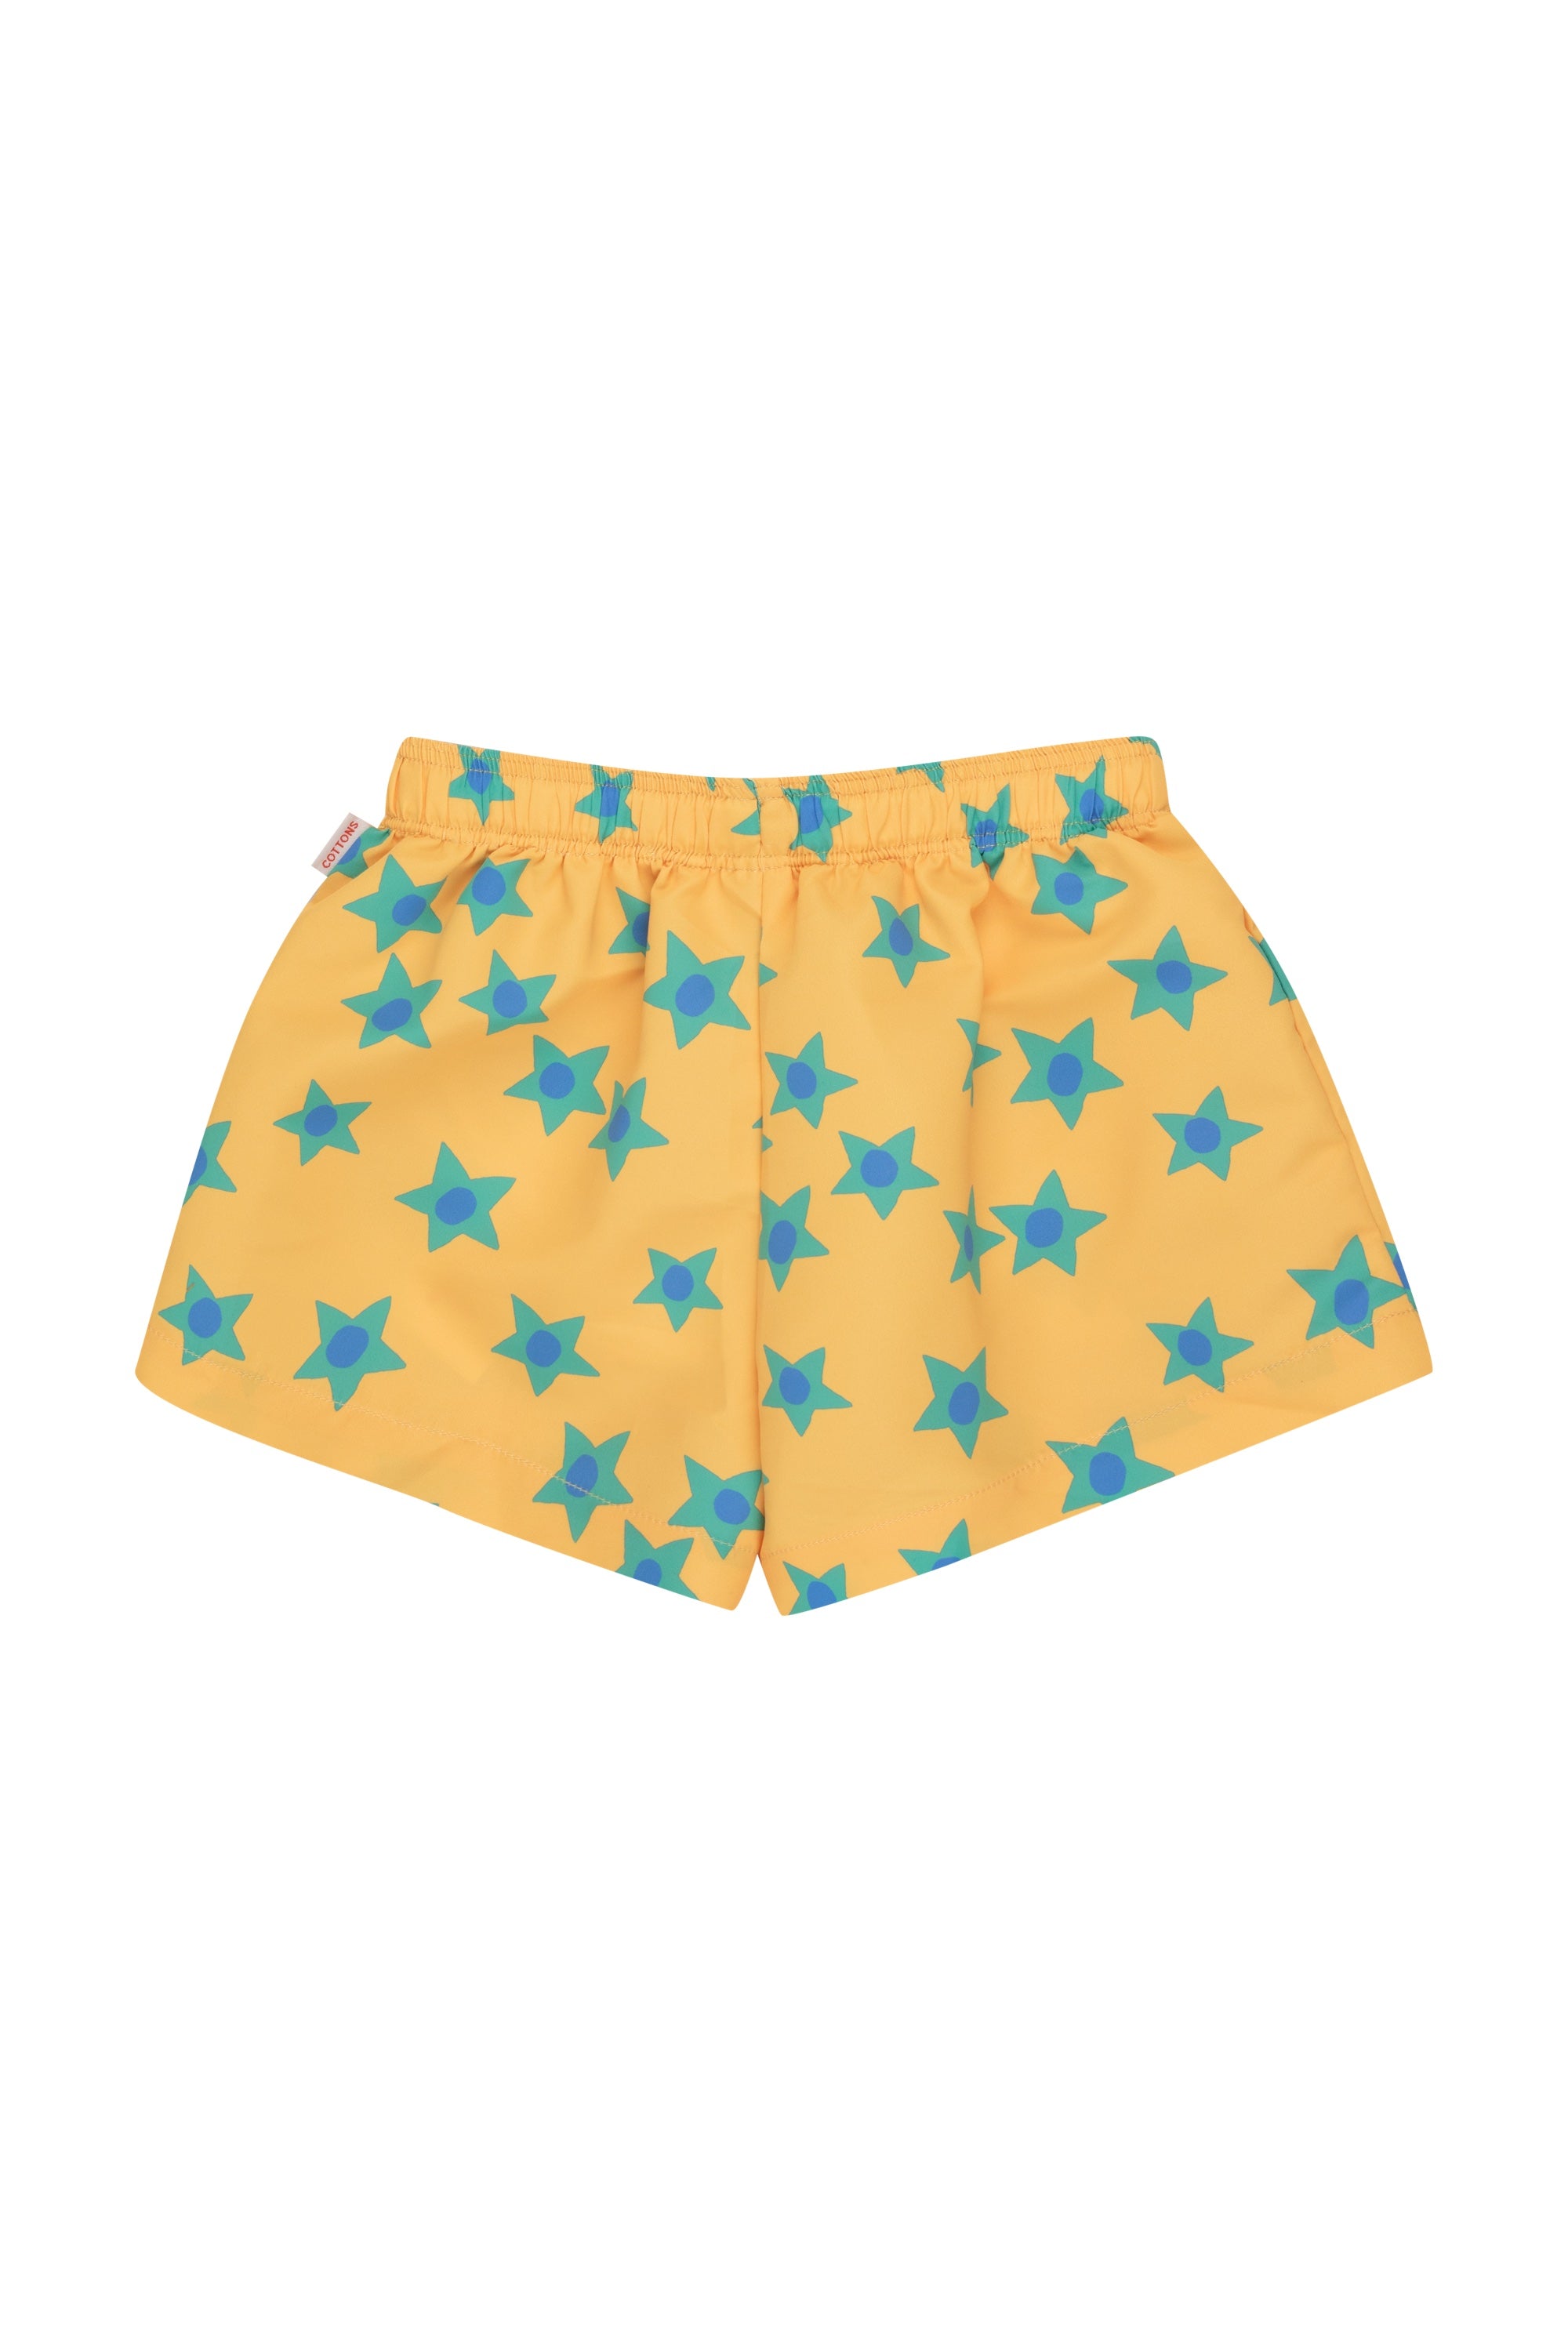 Tiny Cottons Starflowers Trunks - Yellow